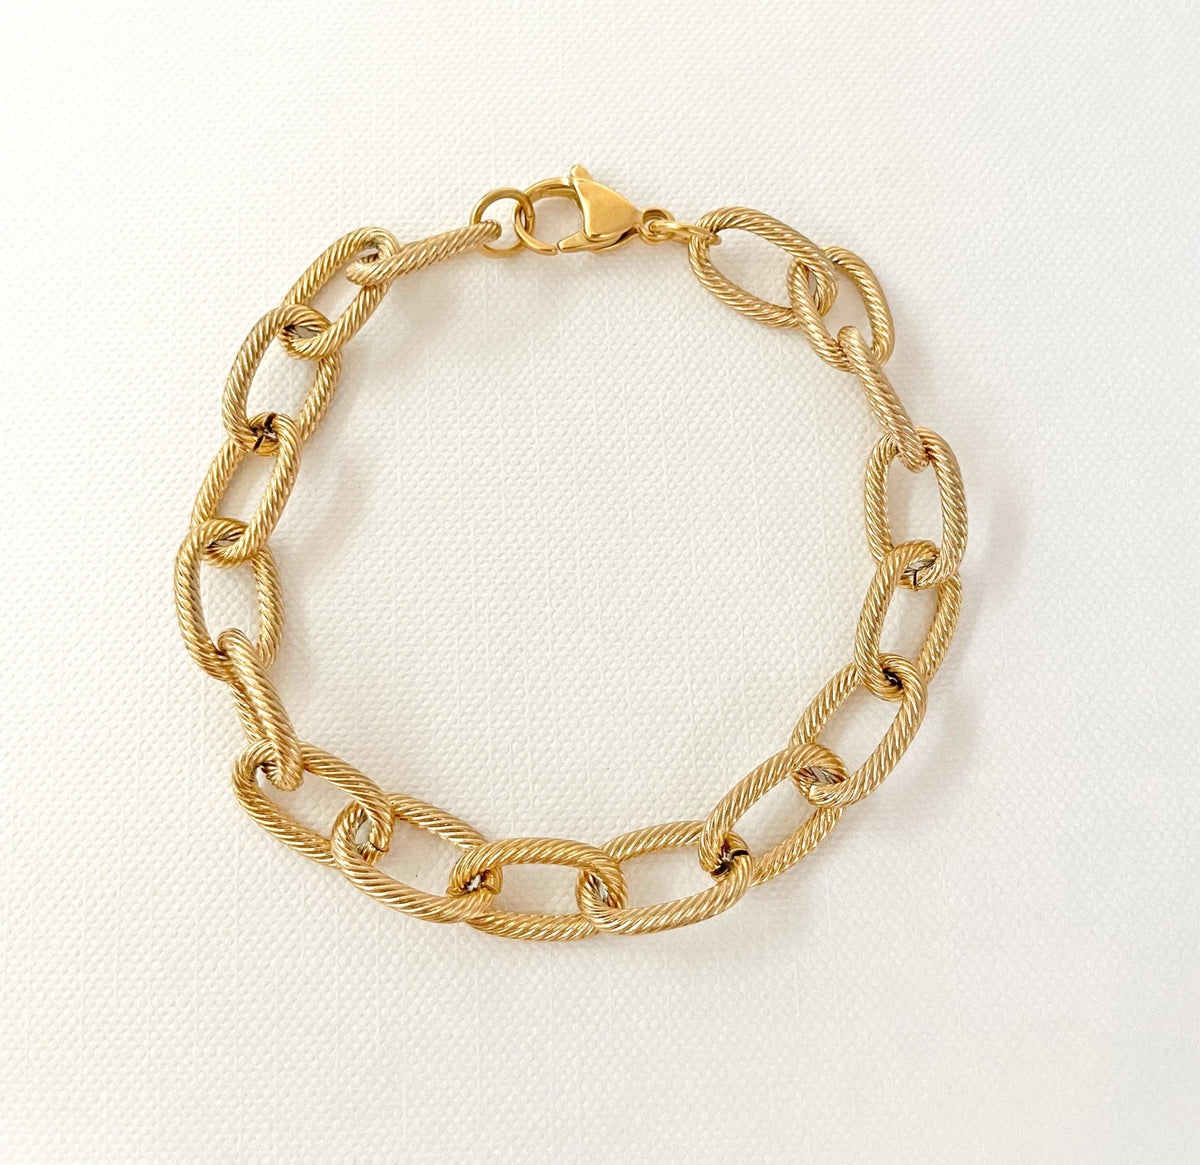 gold textured link chain bracelet waterproof jewelry